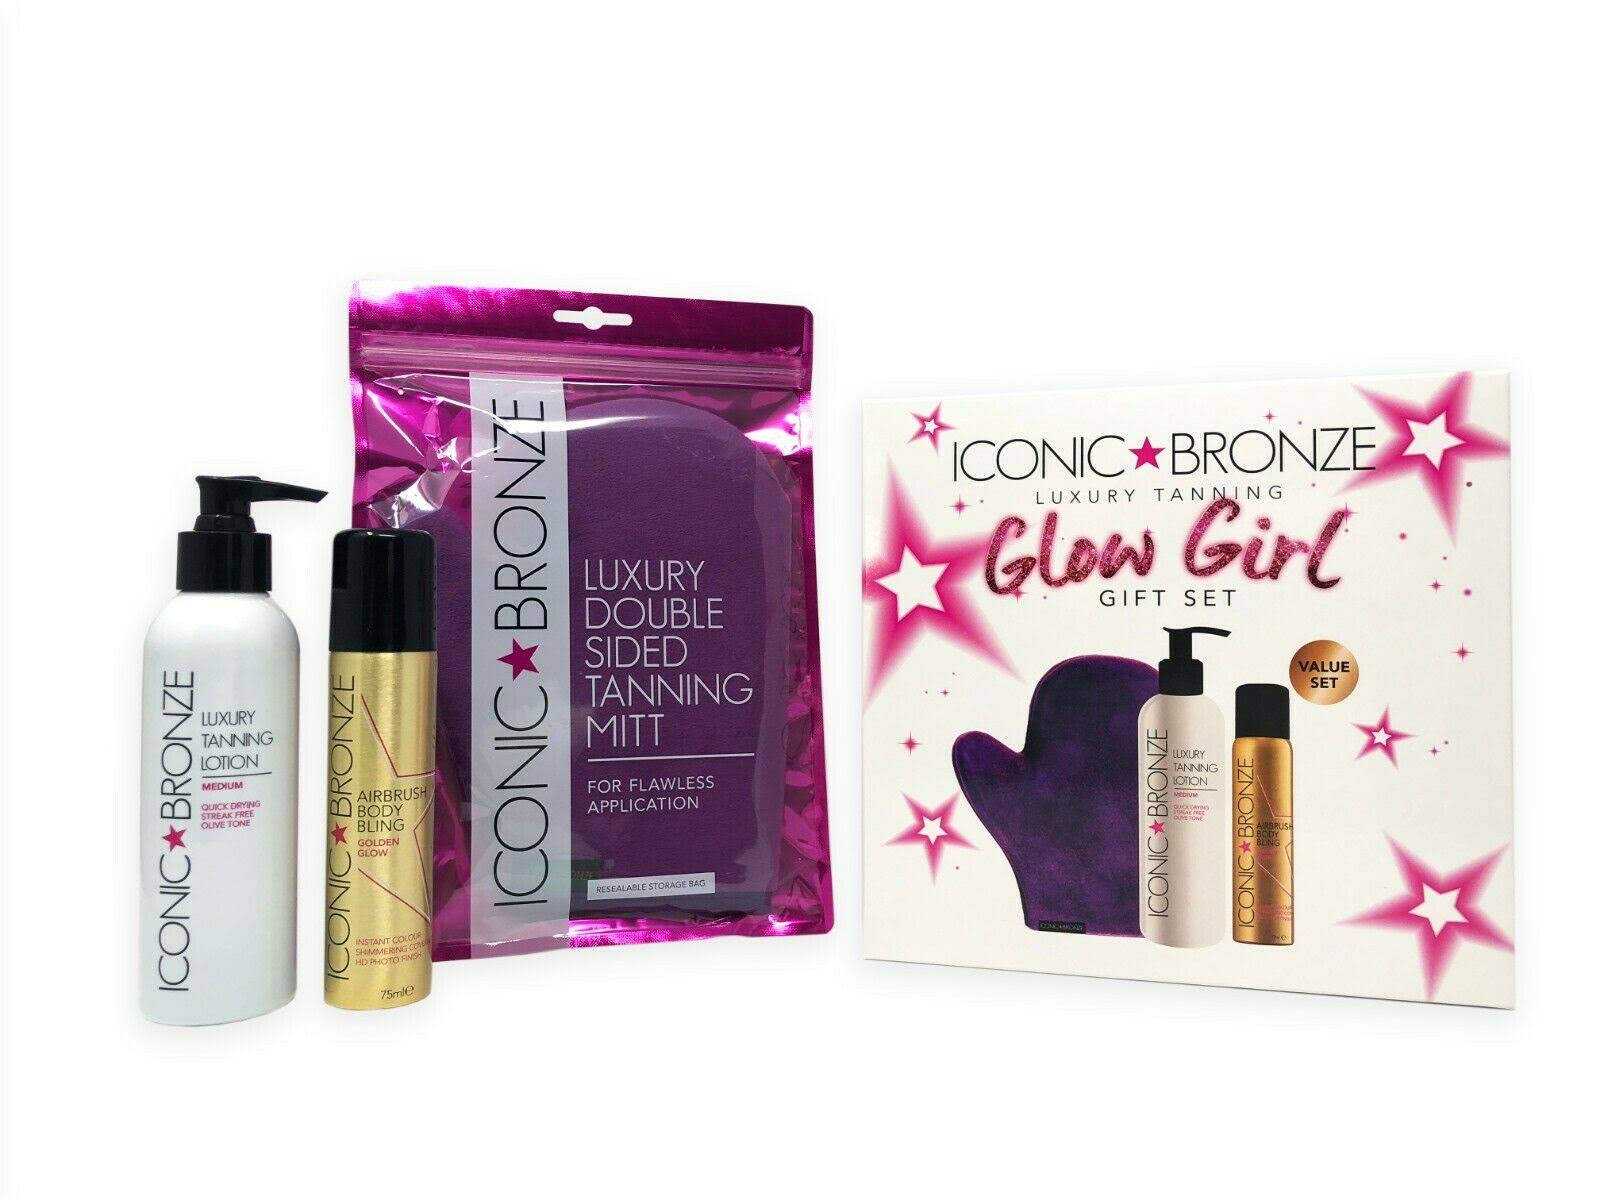 Iconic Bronze Luxury Tanning Glow Girl Gift Lotion Set